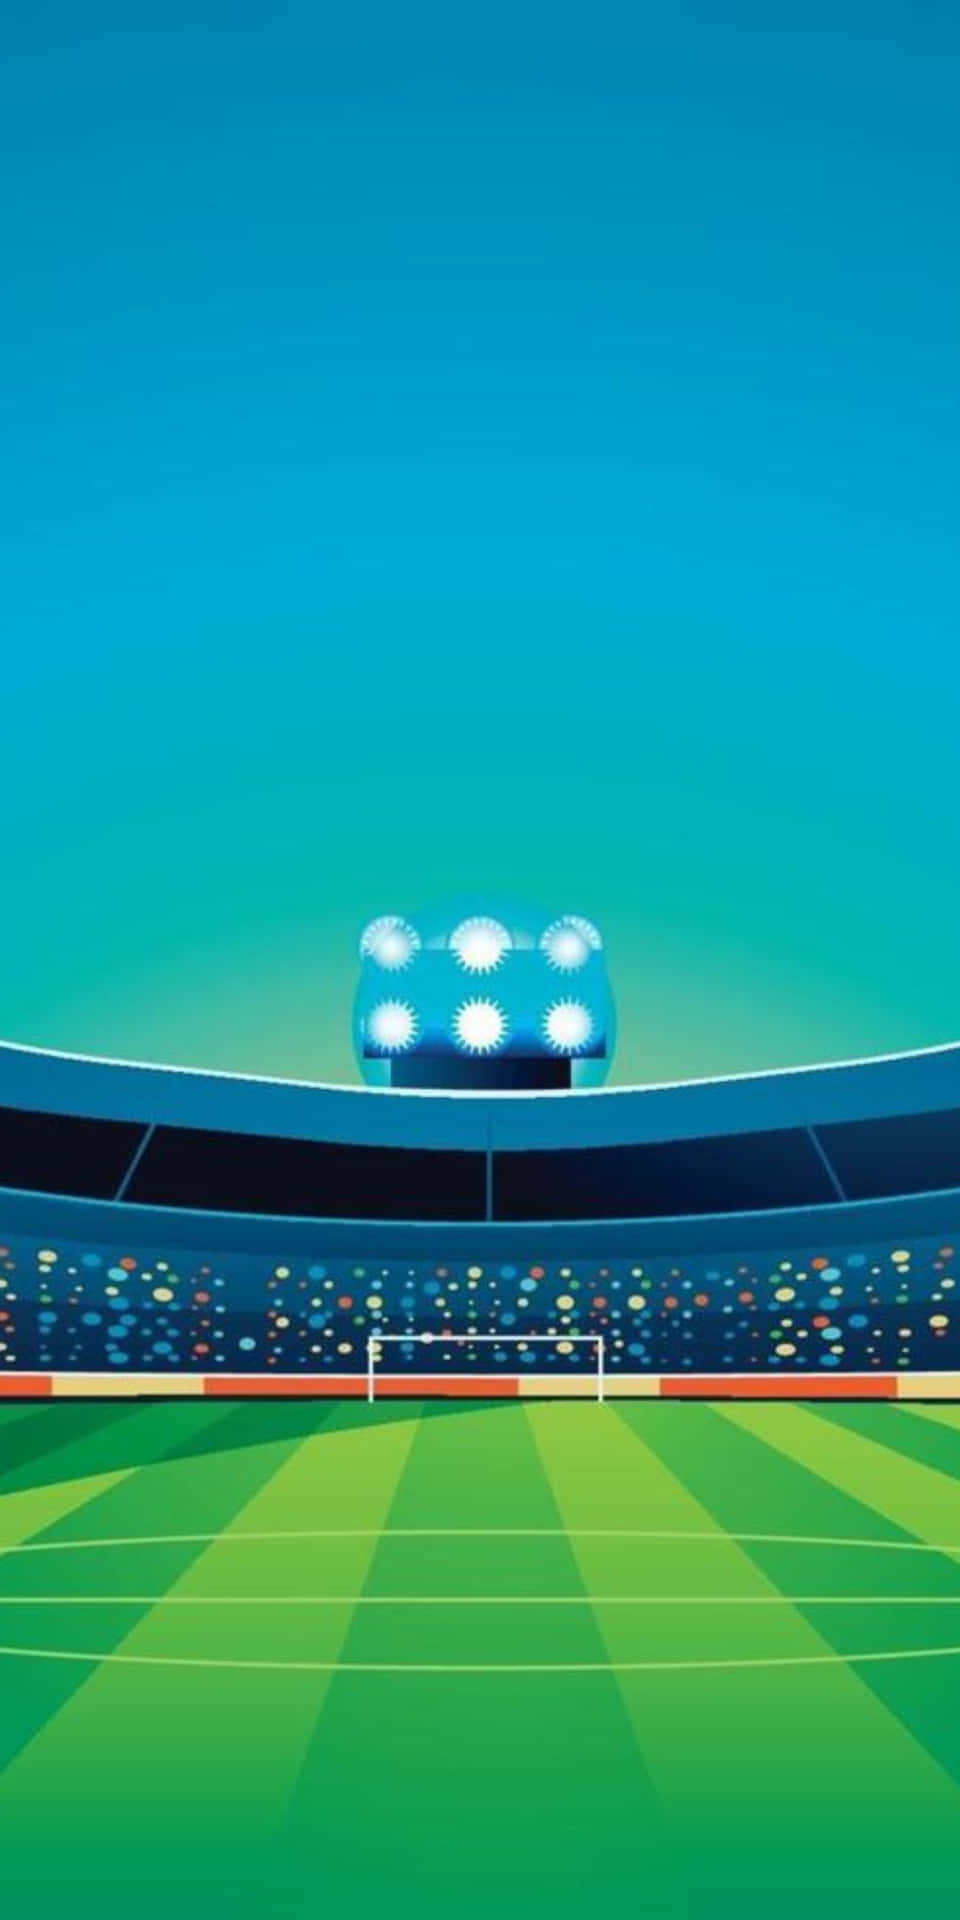 Pixel 3 Football Field Illustration Background